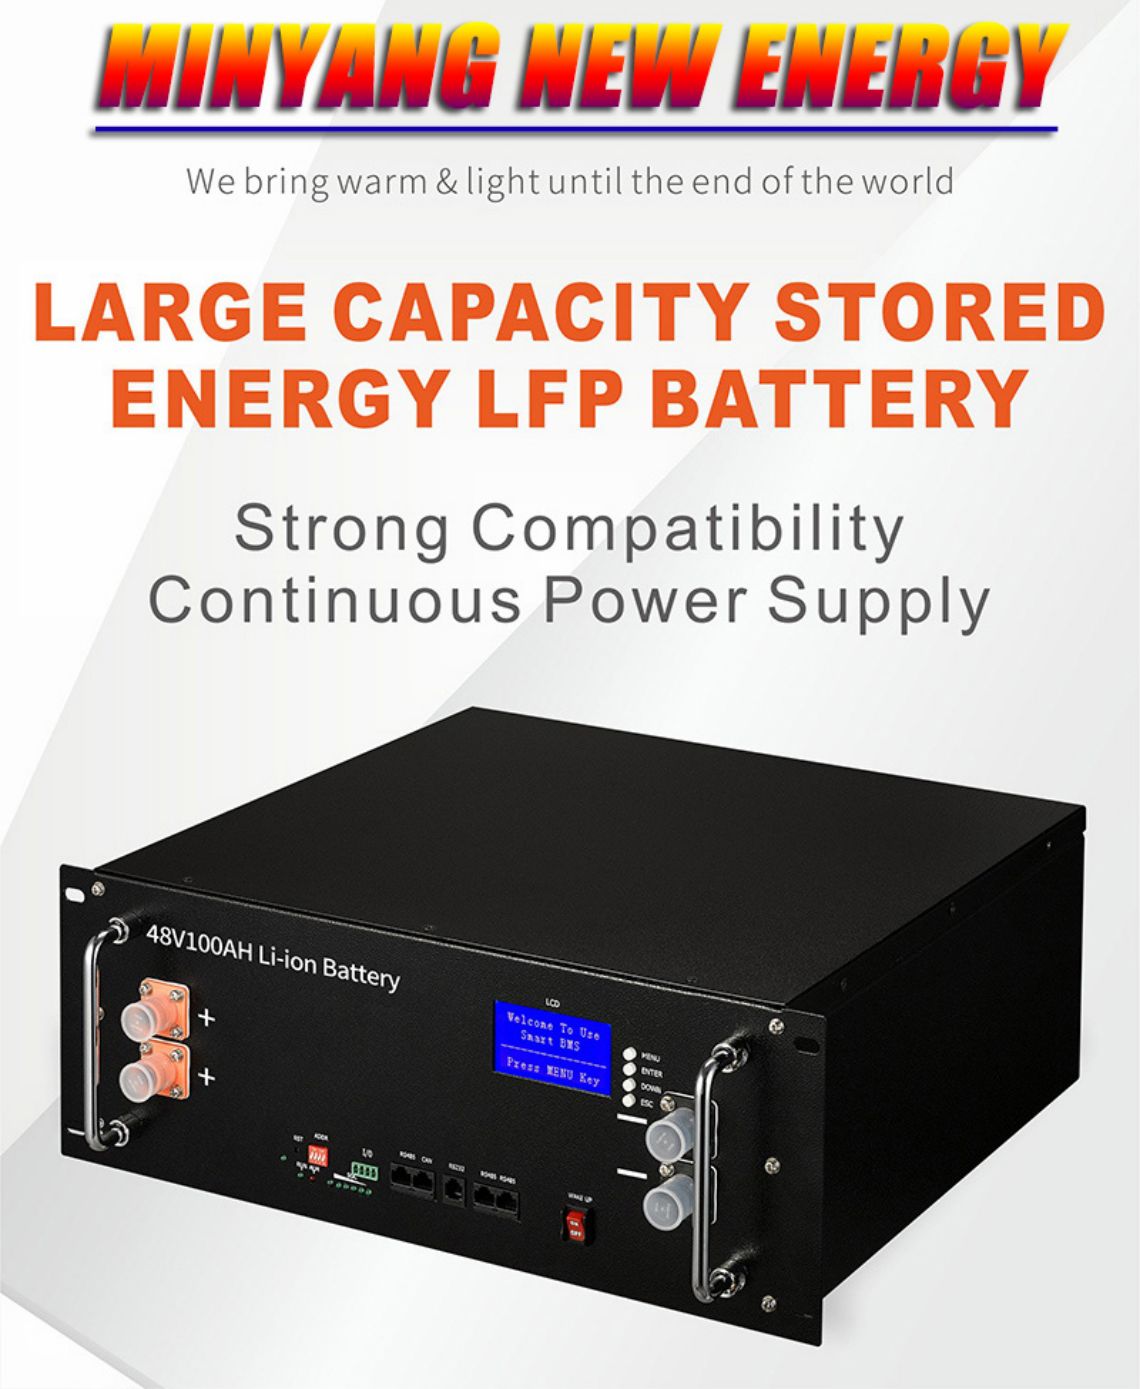 rack-mounted lithium iron phosphate energy storage battery